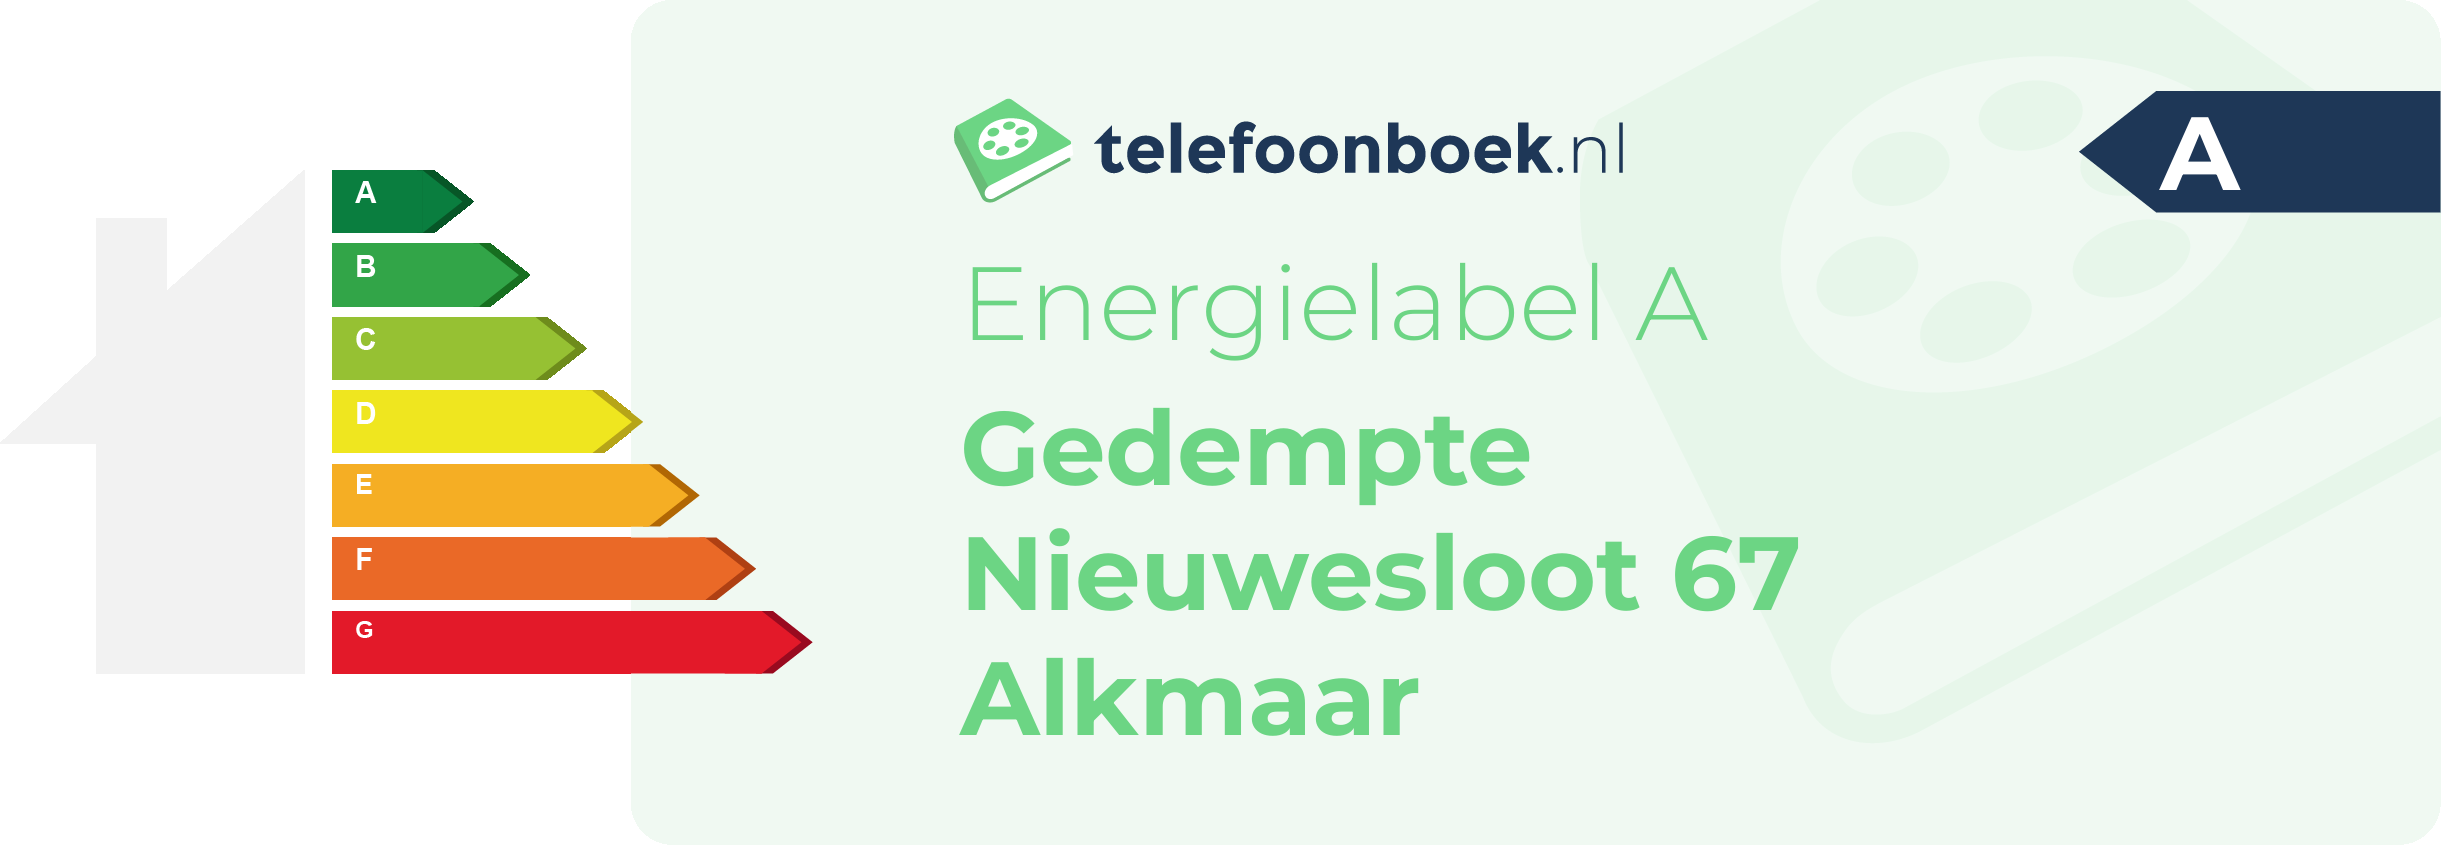 Energielabel Gedempte Nieuwesloot 67 Alkmaar